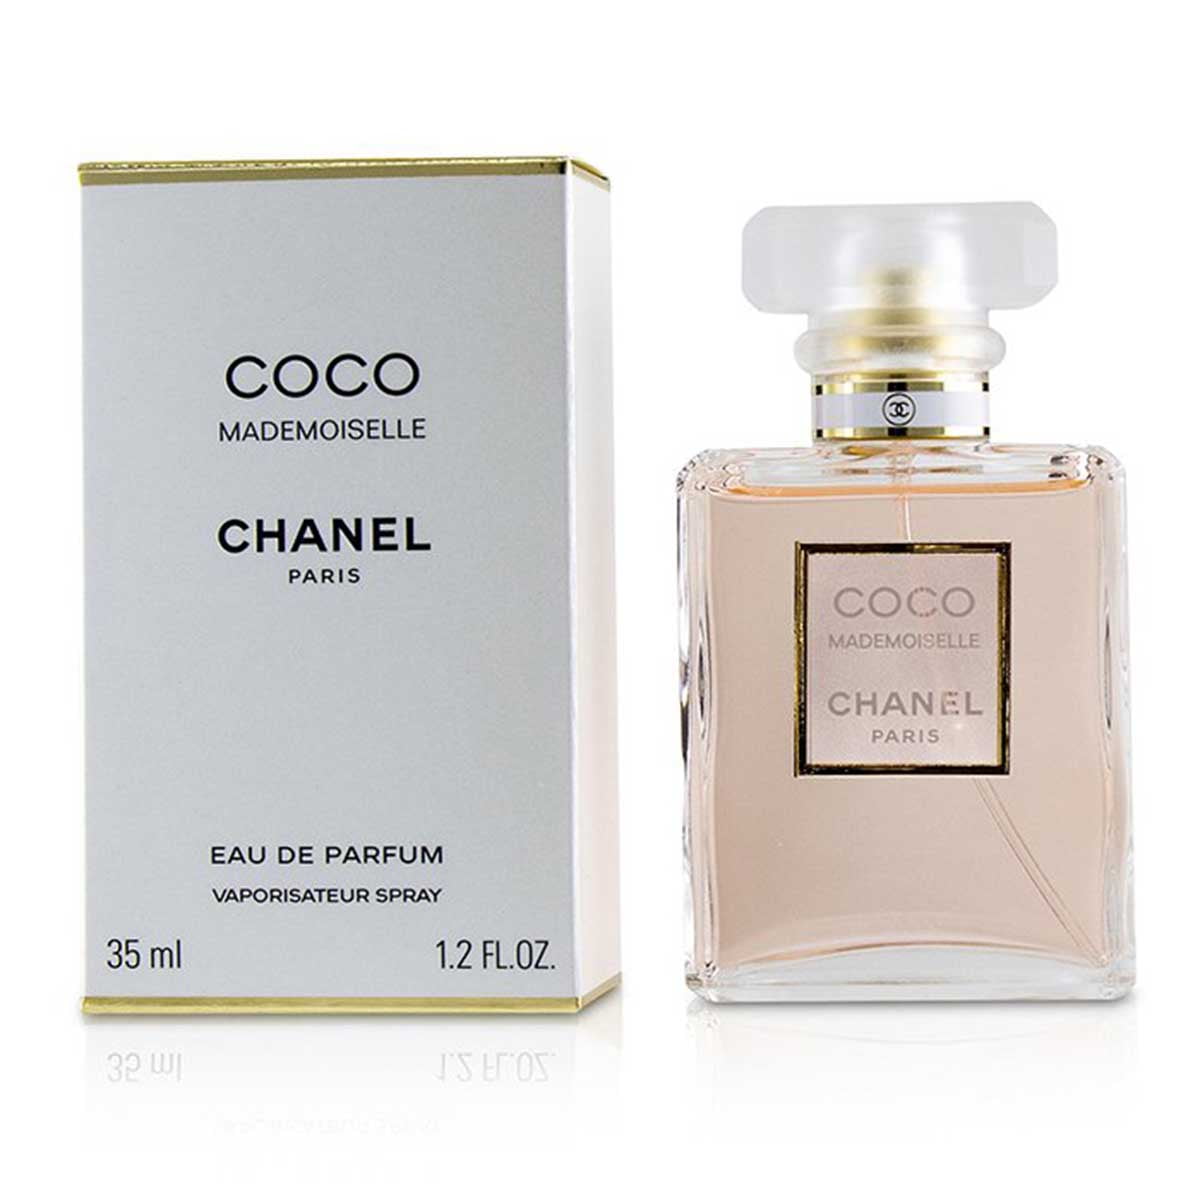 Chanel Coco Mademoiselle Eau de Parfum 35 ml / 1.2 oz - Walmart.com